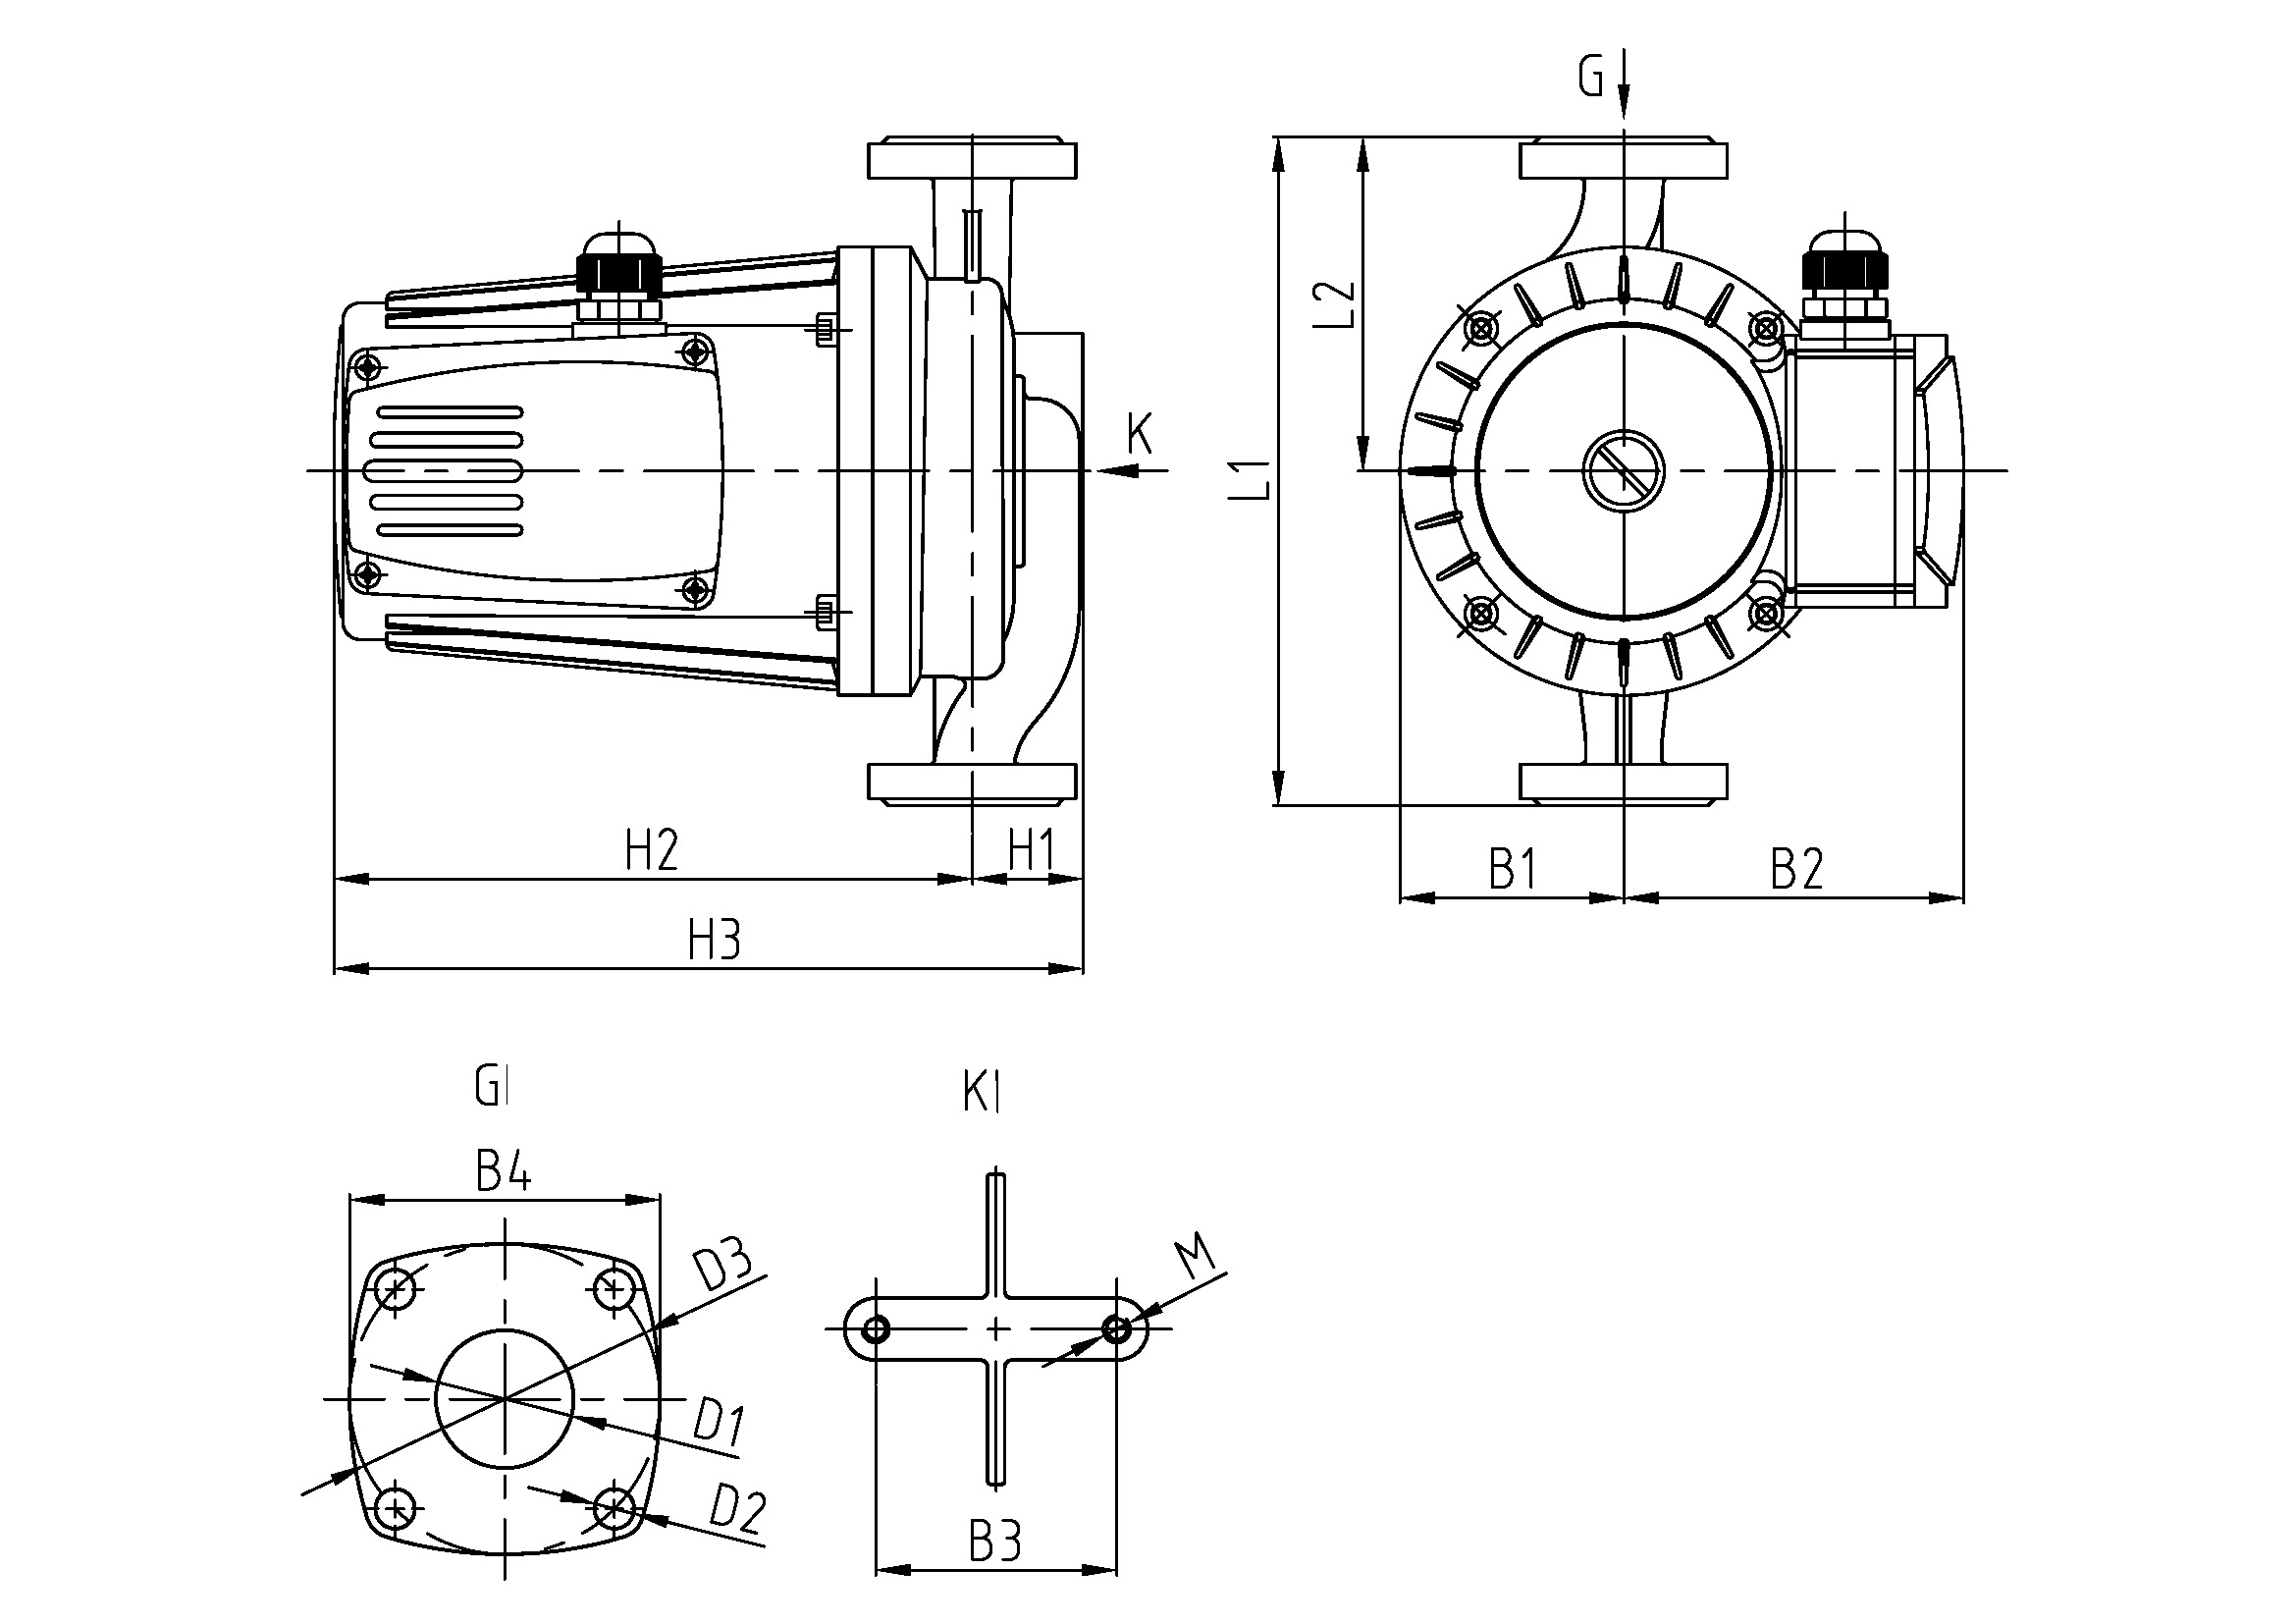 Basic Pro 32-9SF three speed circulation pump with flange circulation